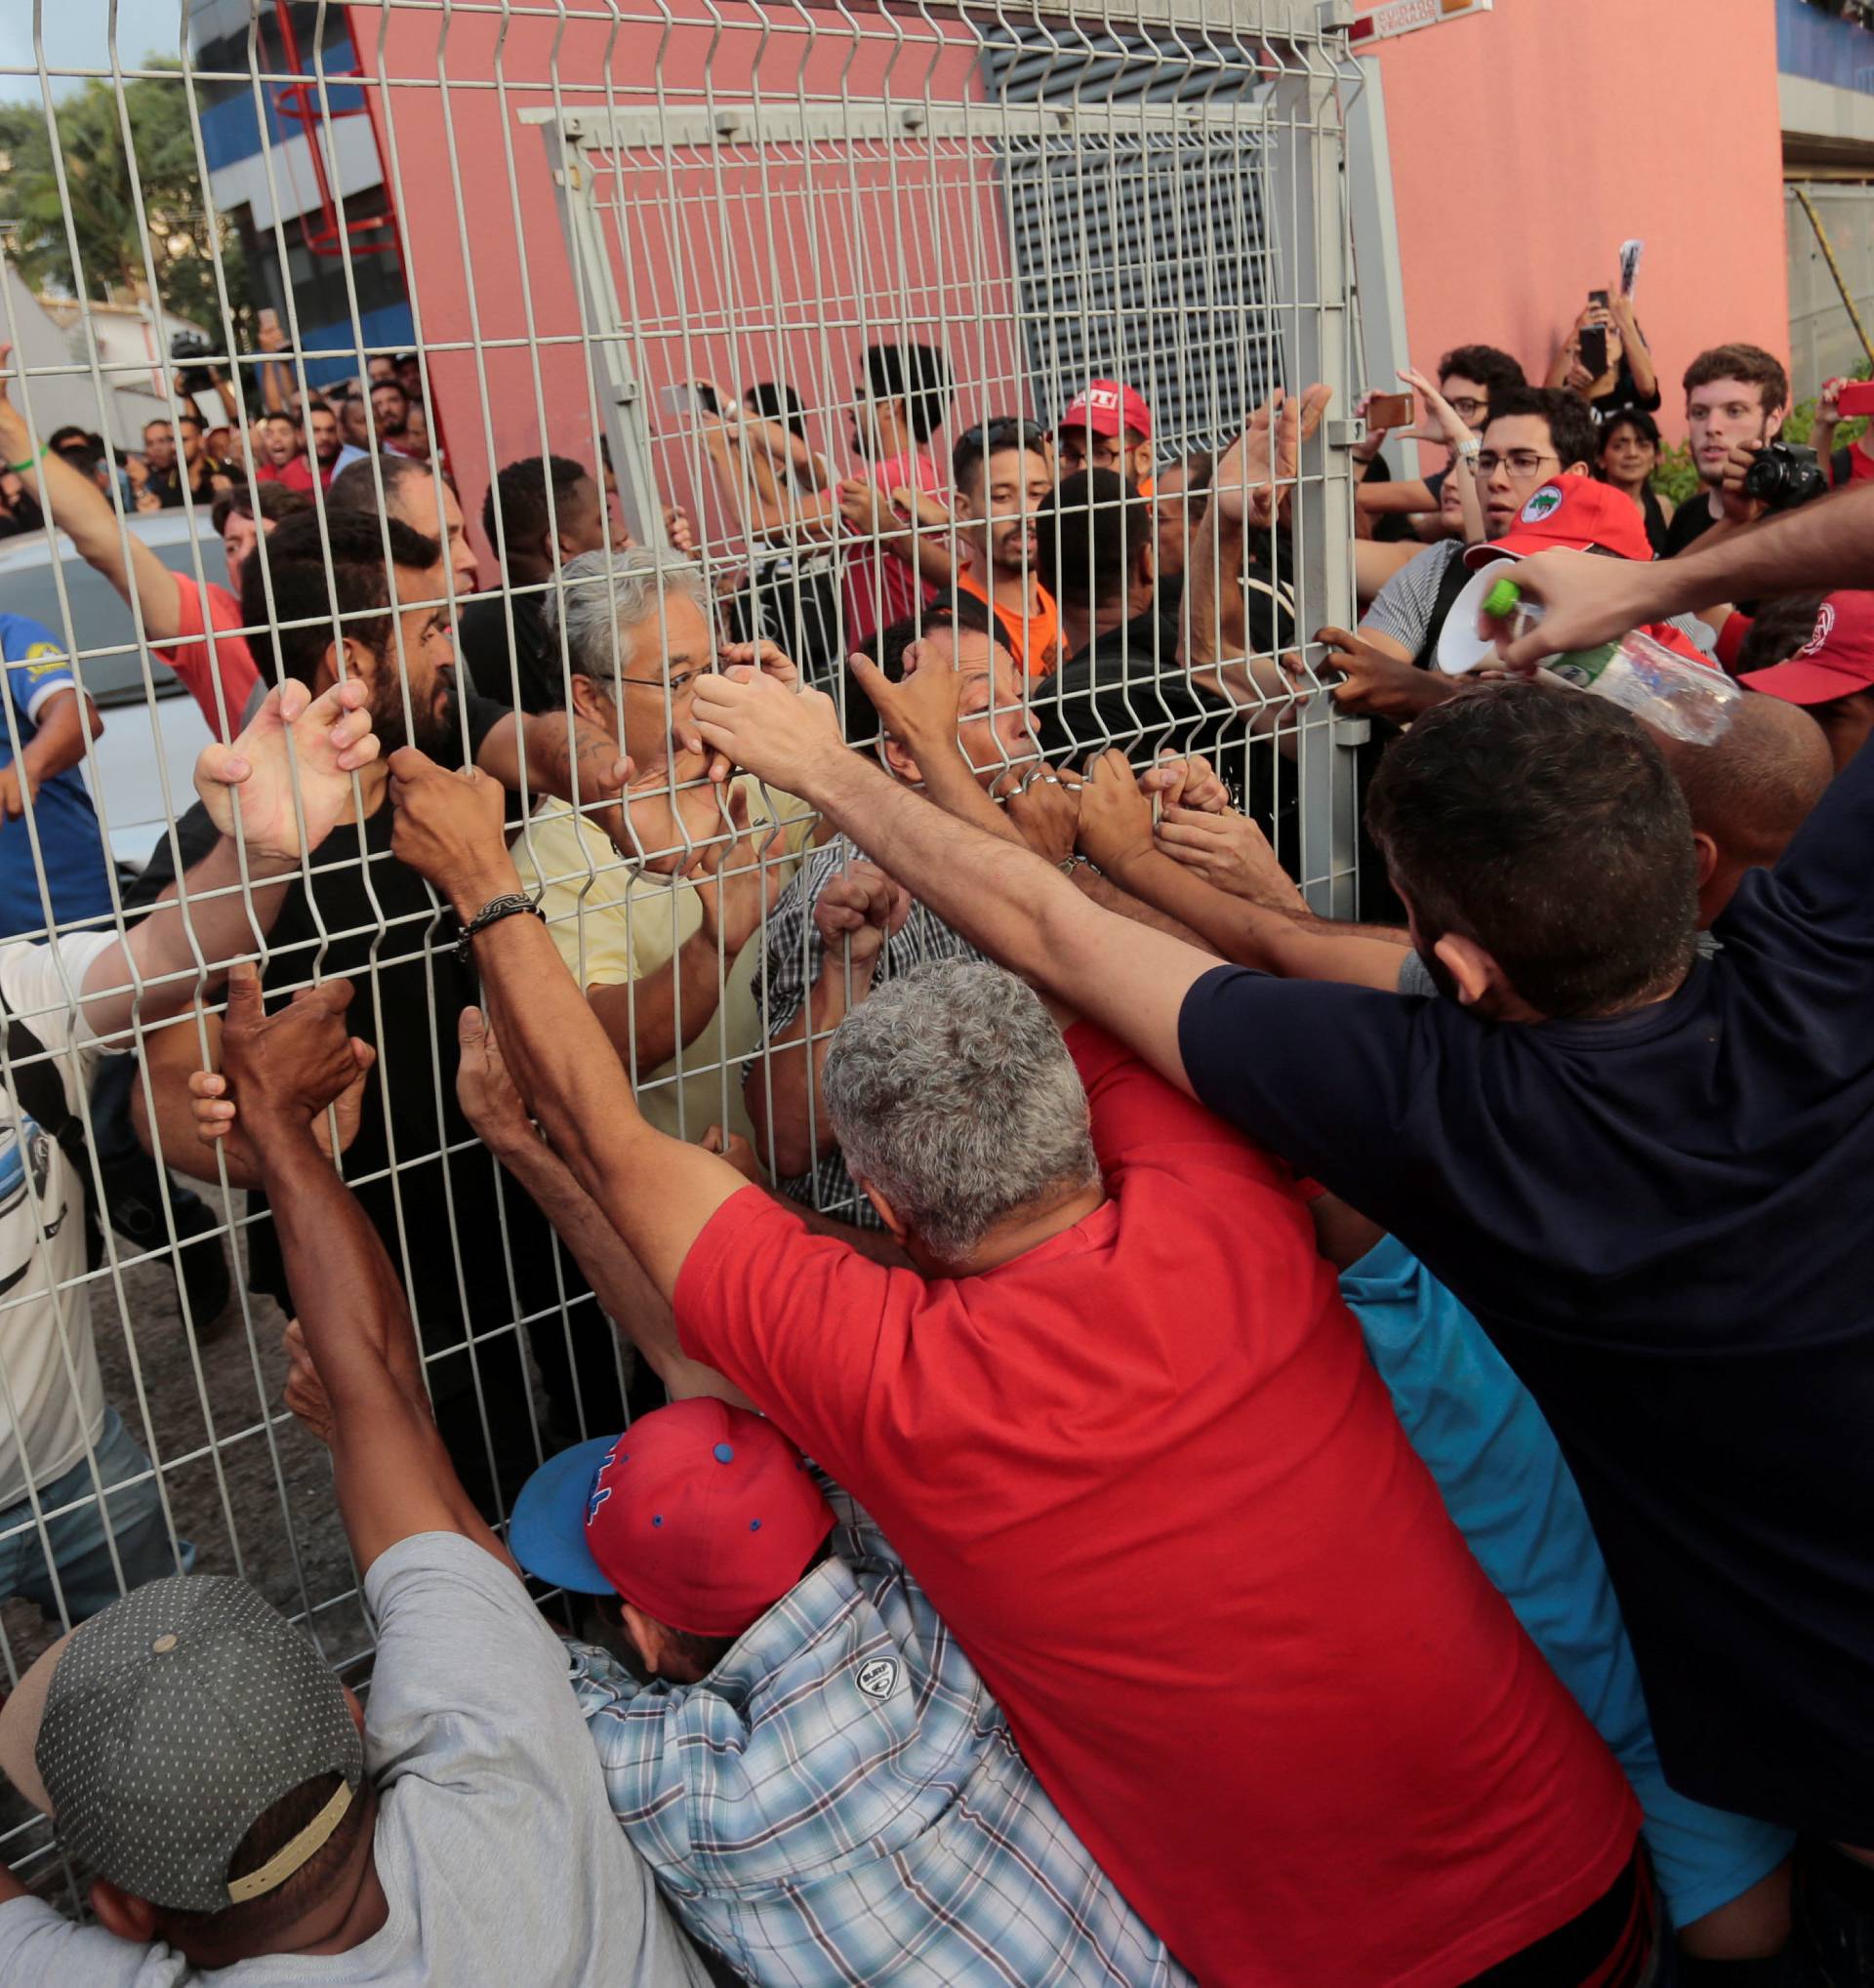 Supporters of former Brazilian President Luiz Inacio Lula da Silva block the way out as Lula tries to leave the metallurgic trade union in Sao Bernardo do Campo